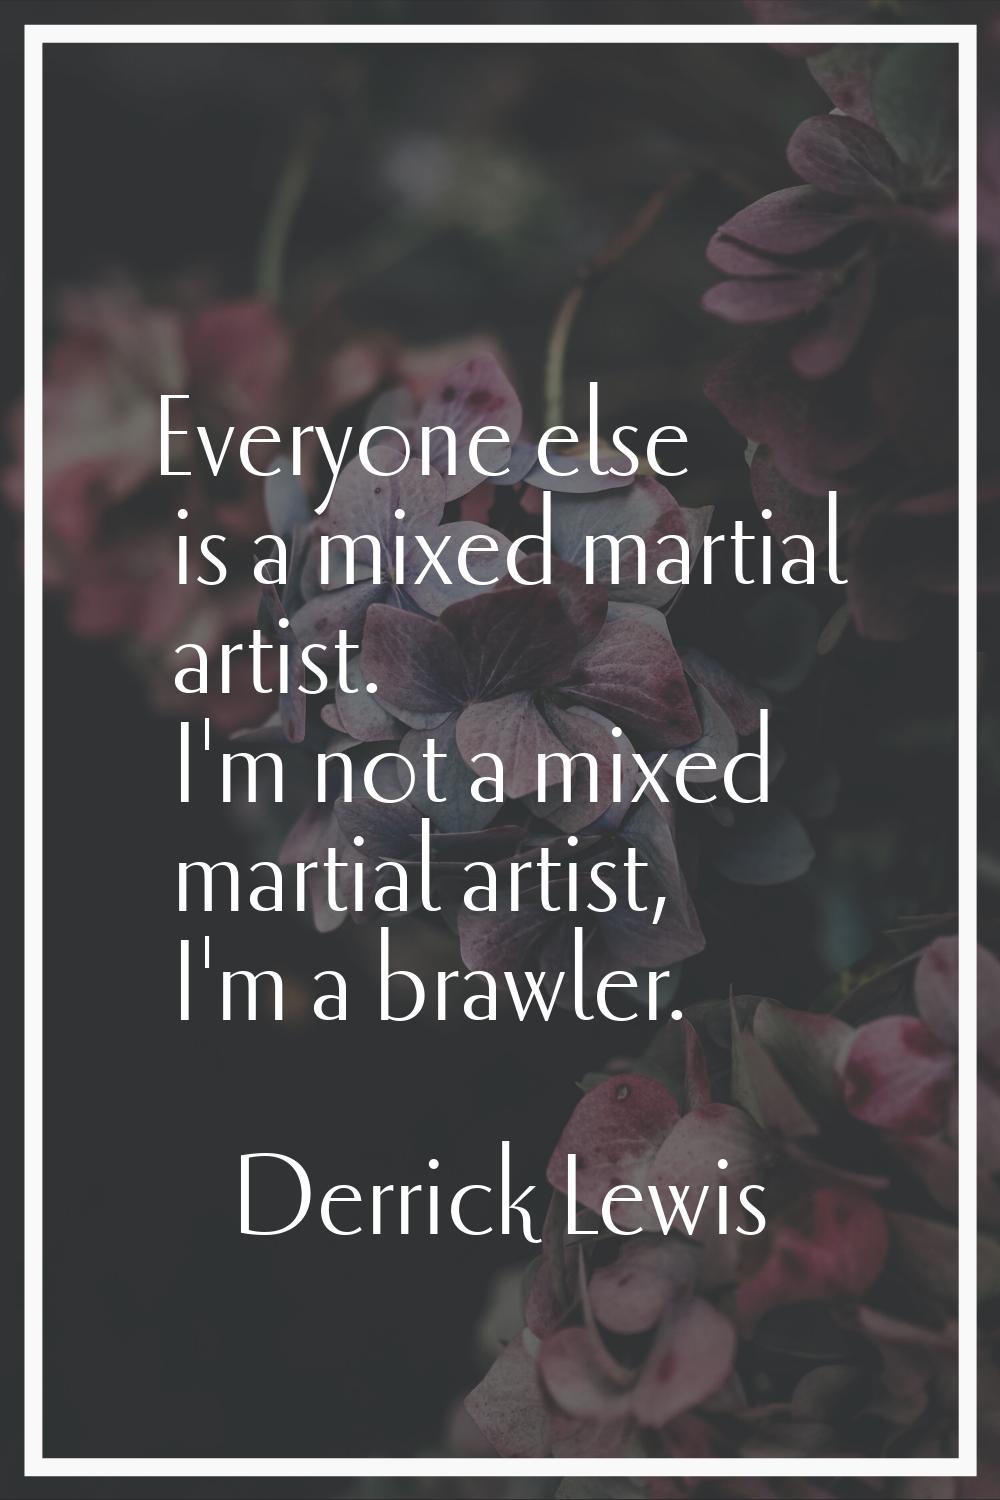 Everyone else is a mixed martial artist. I'm not a mixed martial artist, I'm a brawler.